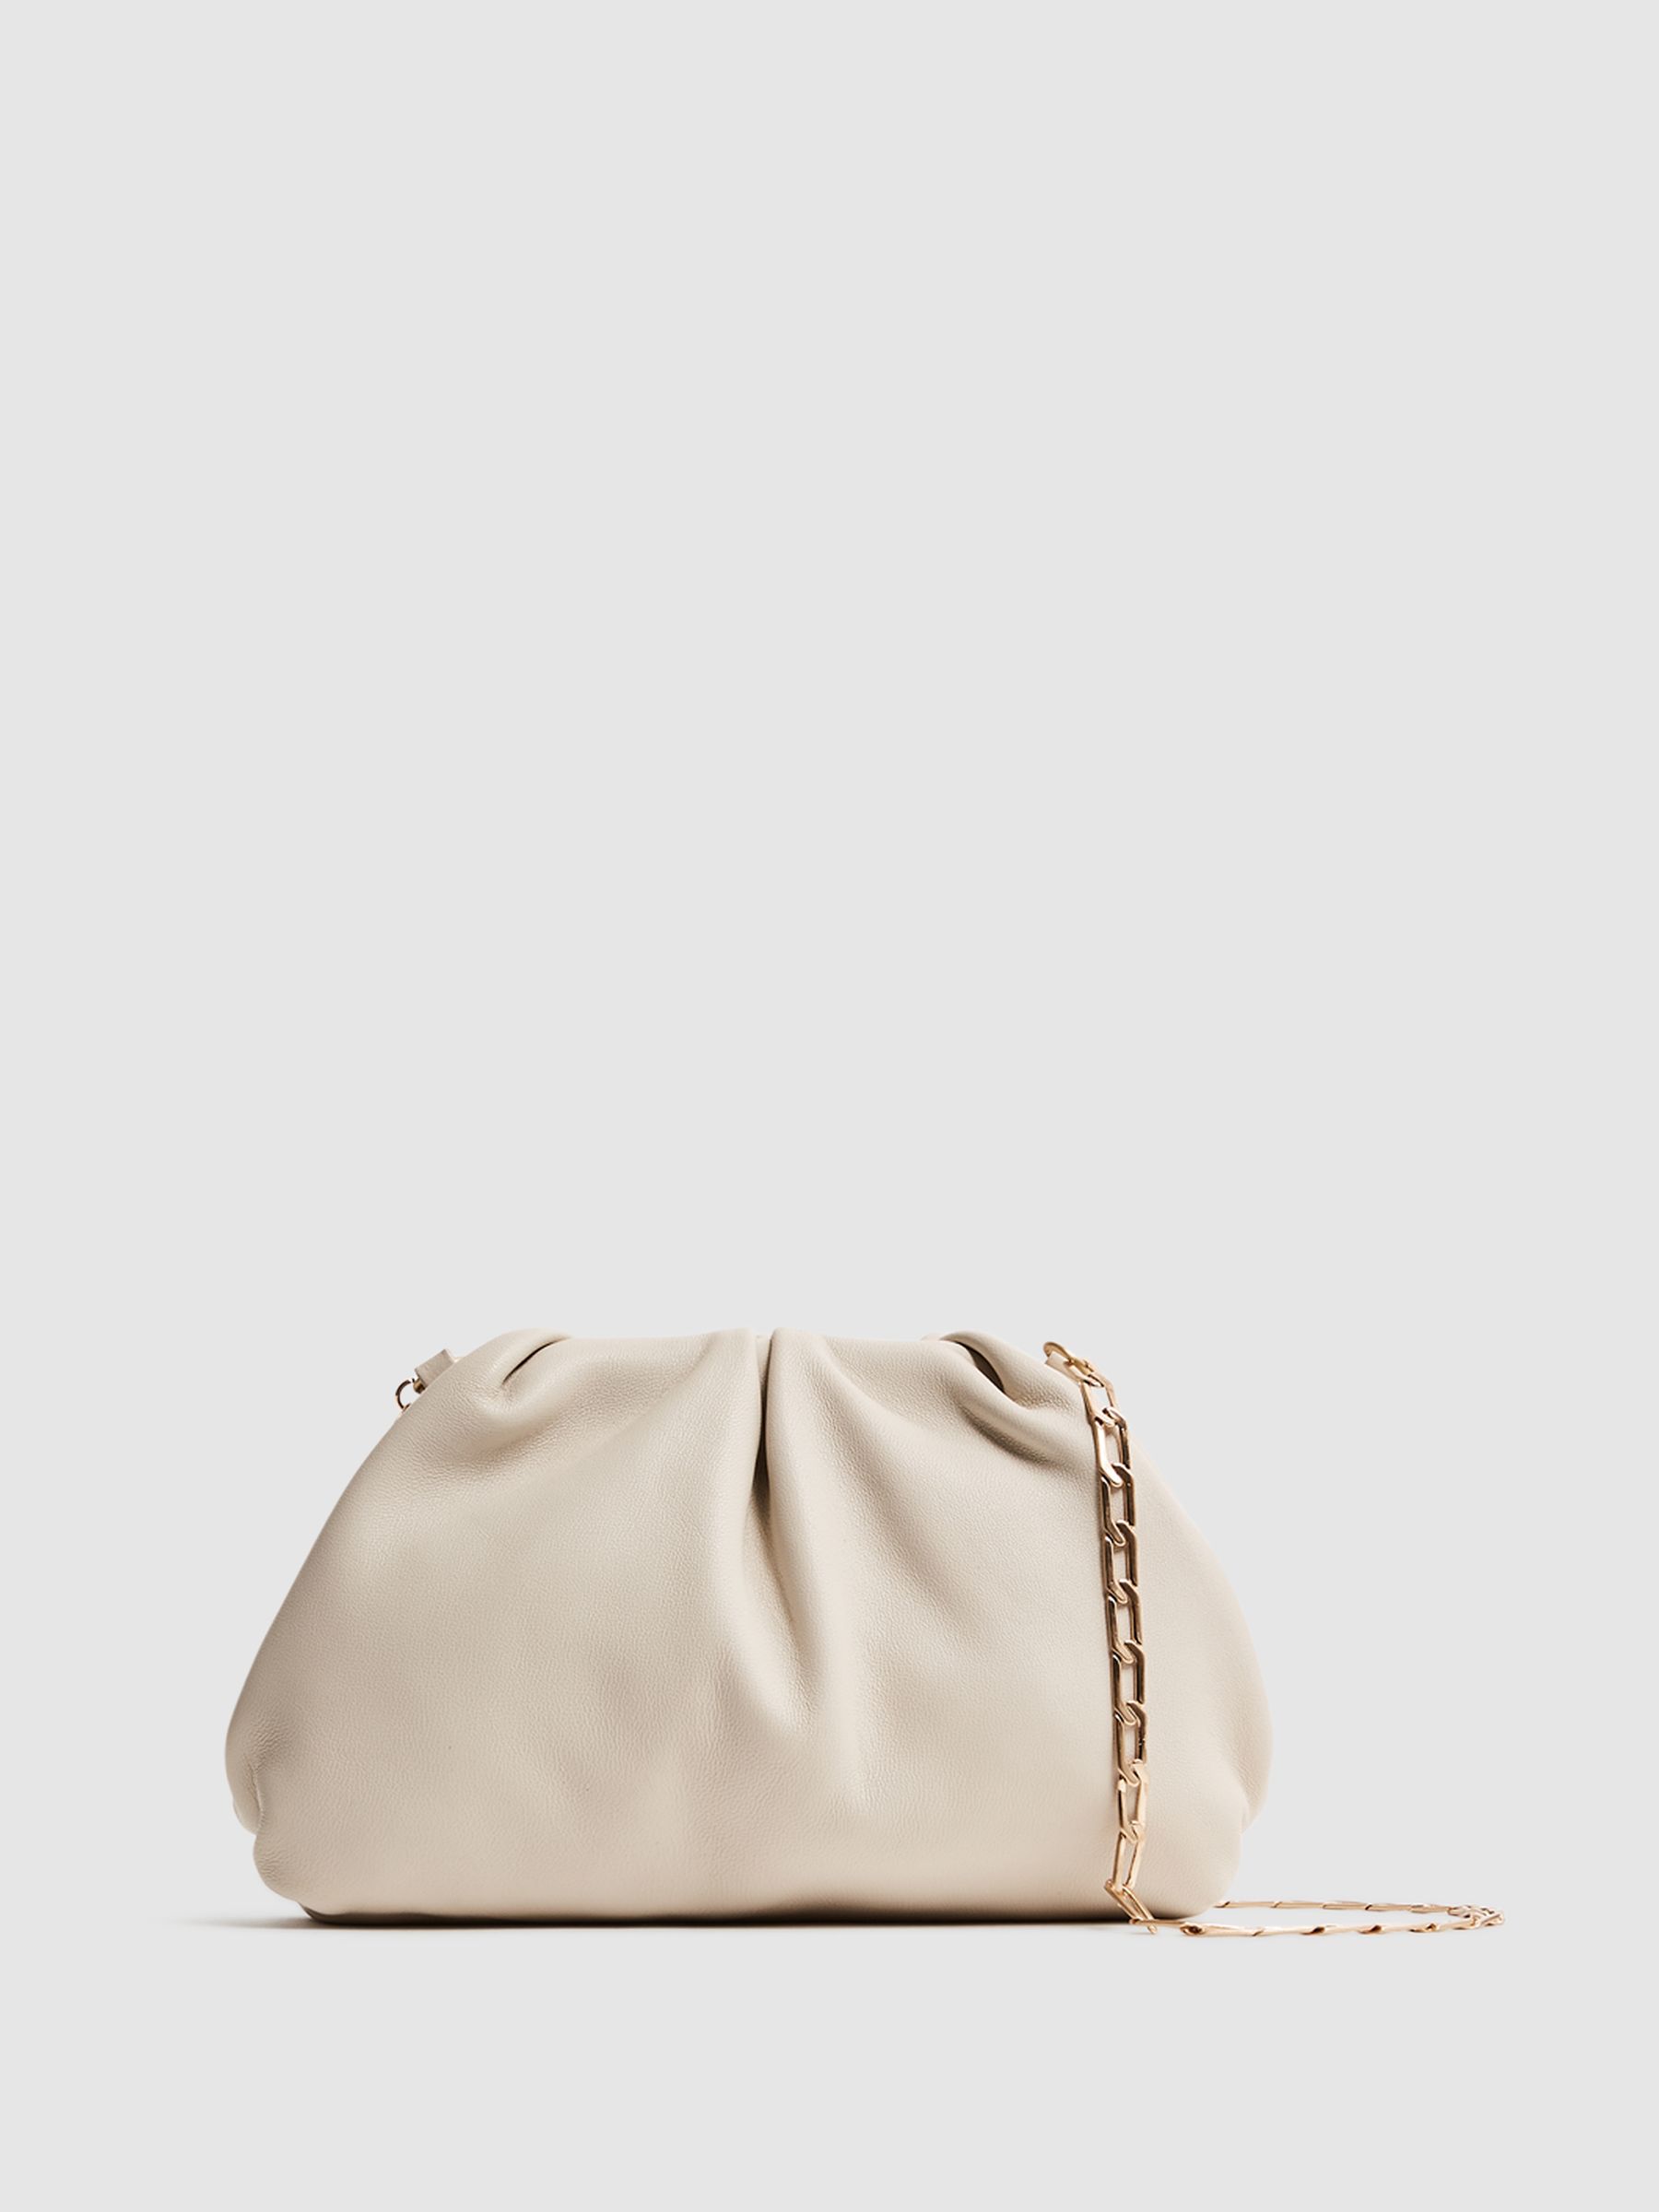 Reiss Off-White Elsa Nappa Leather Clutch Bag